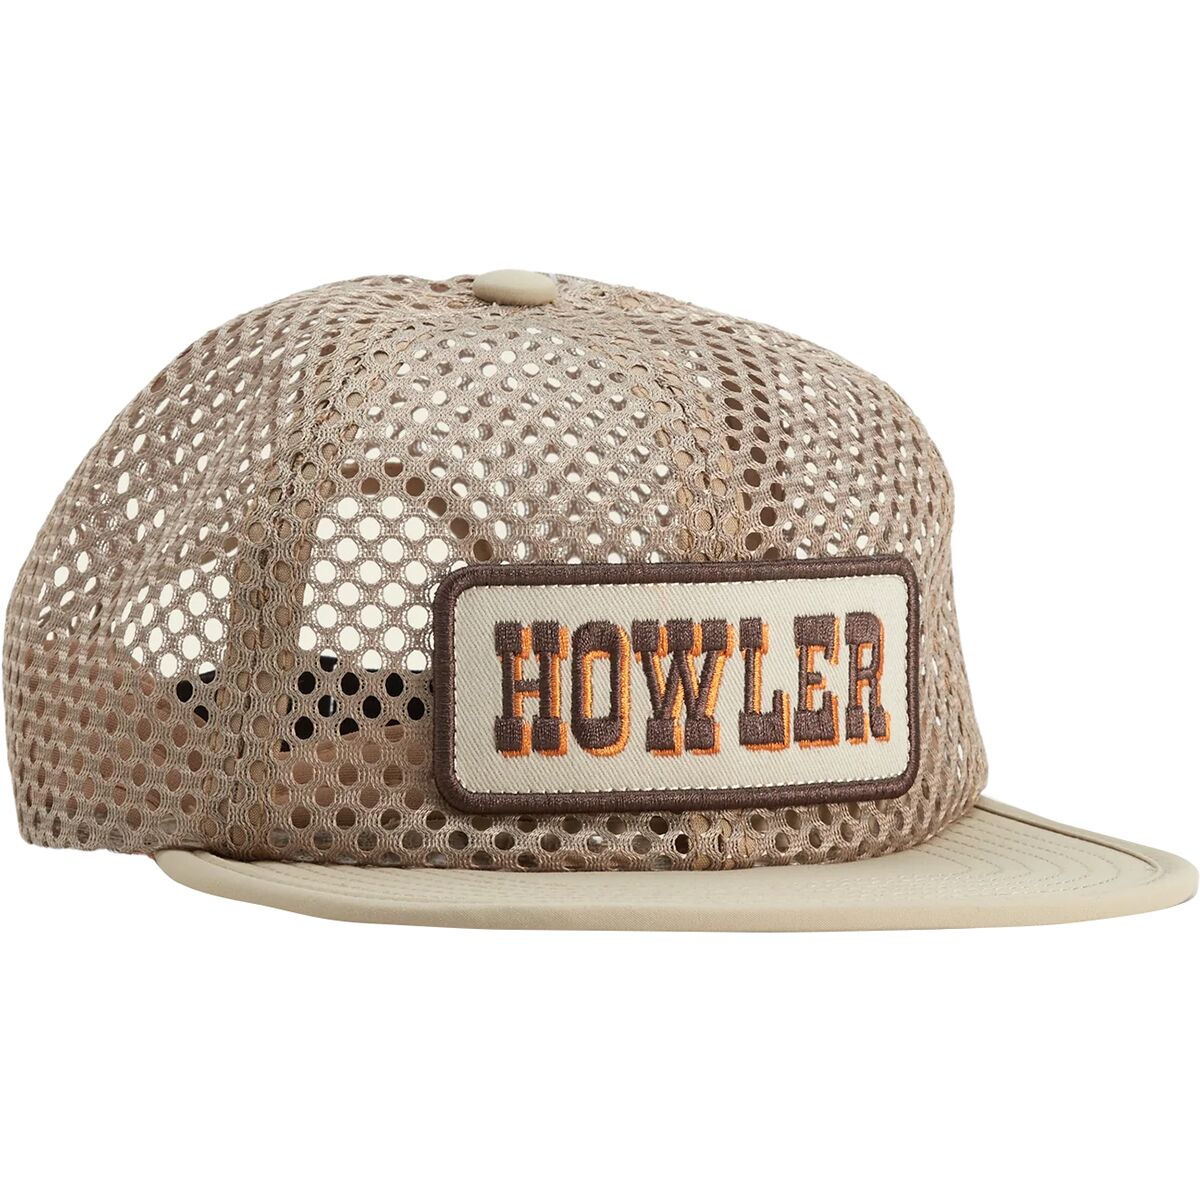 Техническая шляпа feedstore Howler Brothers, хаки